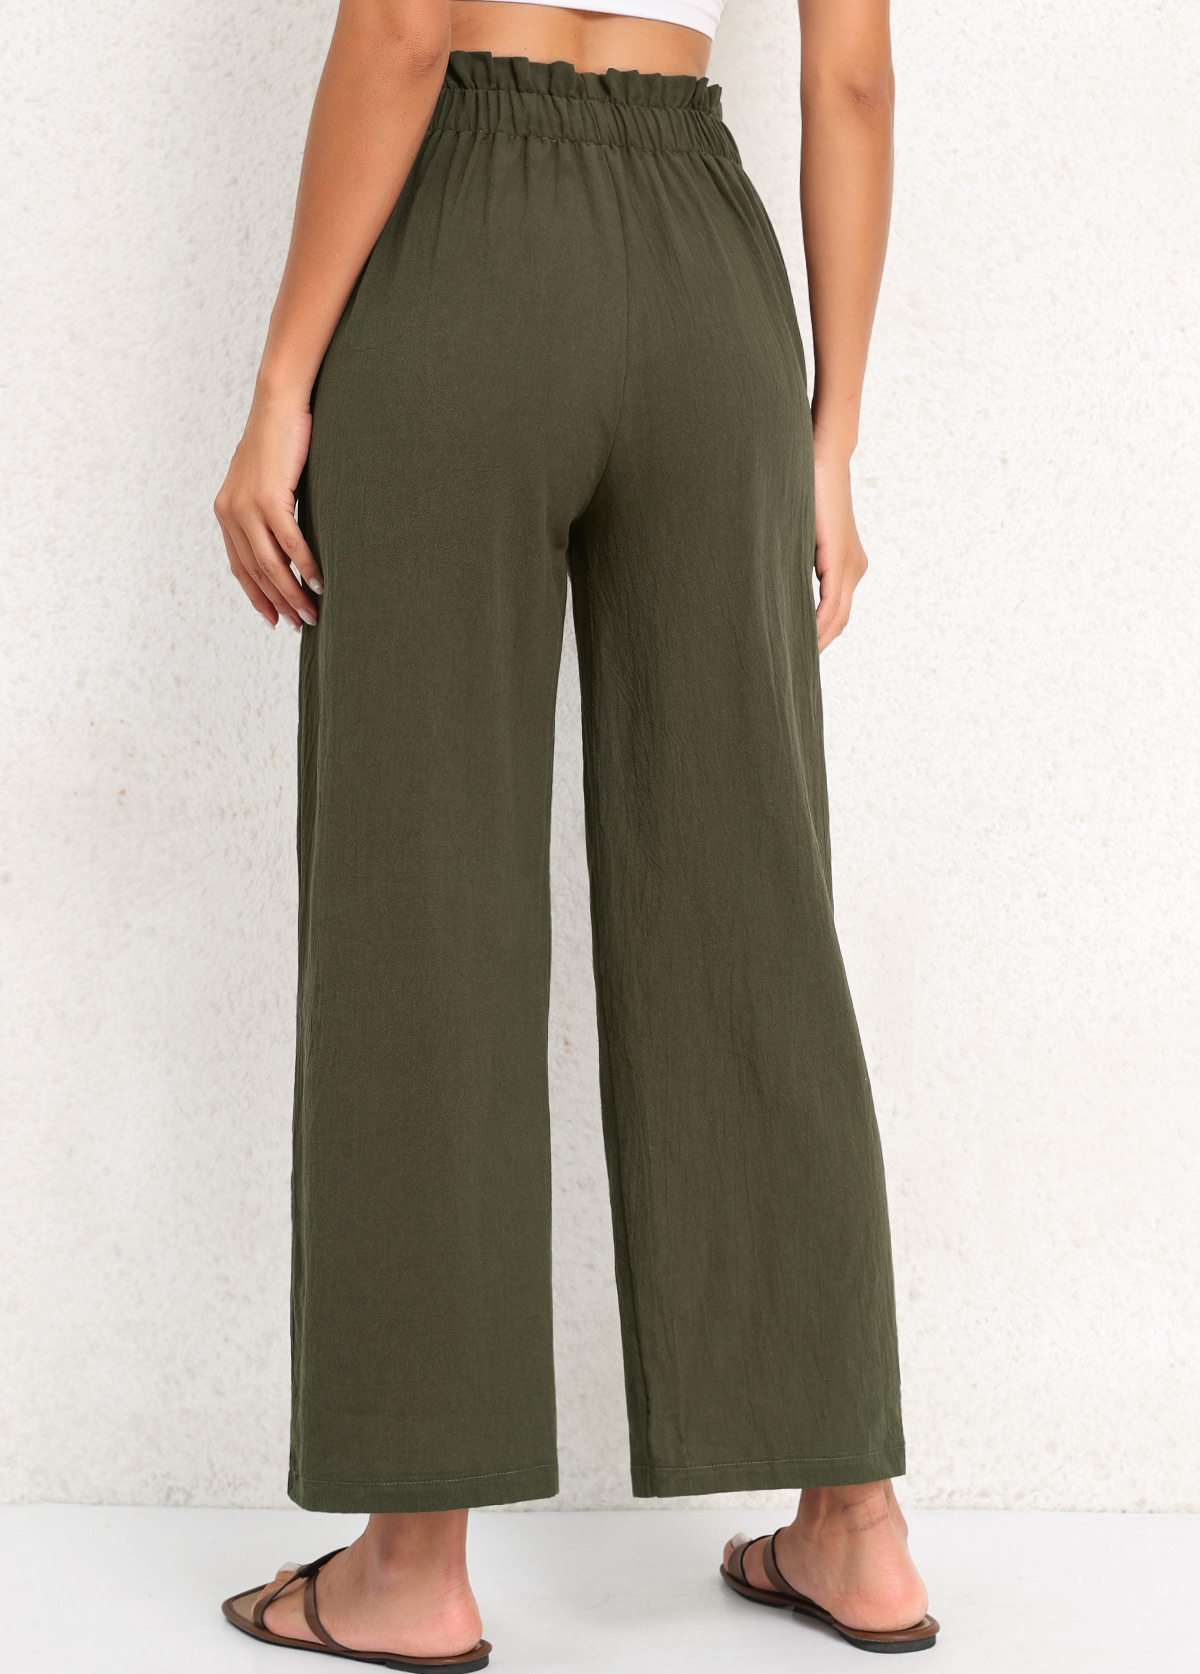 Olive Green Button Elastic Waist High Waisted Pants